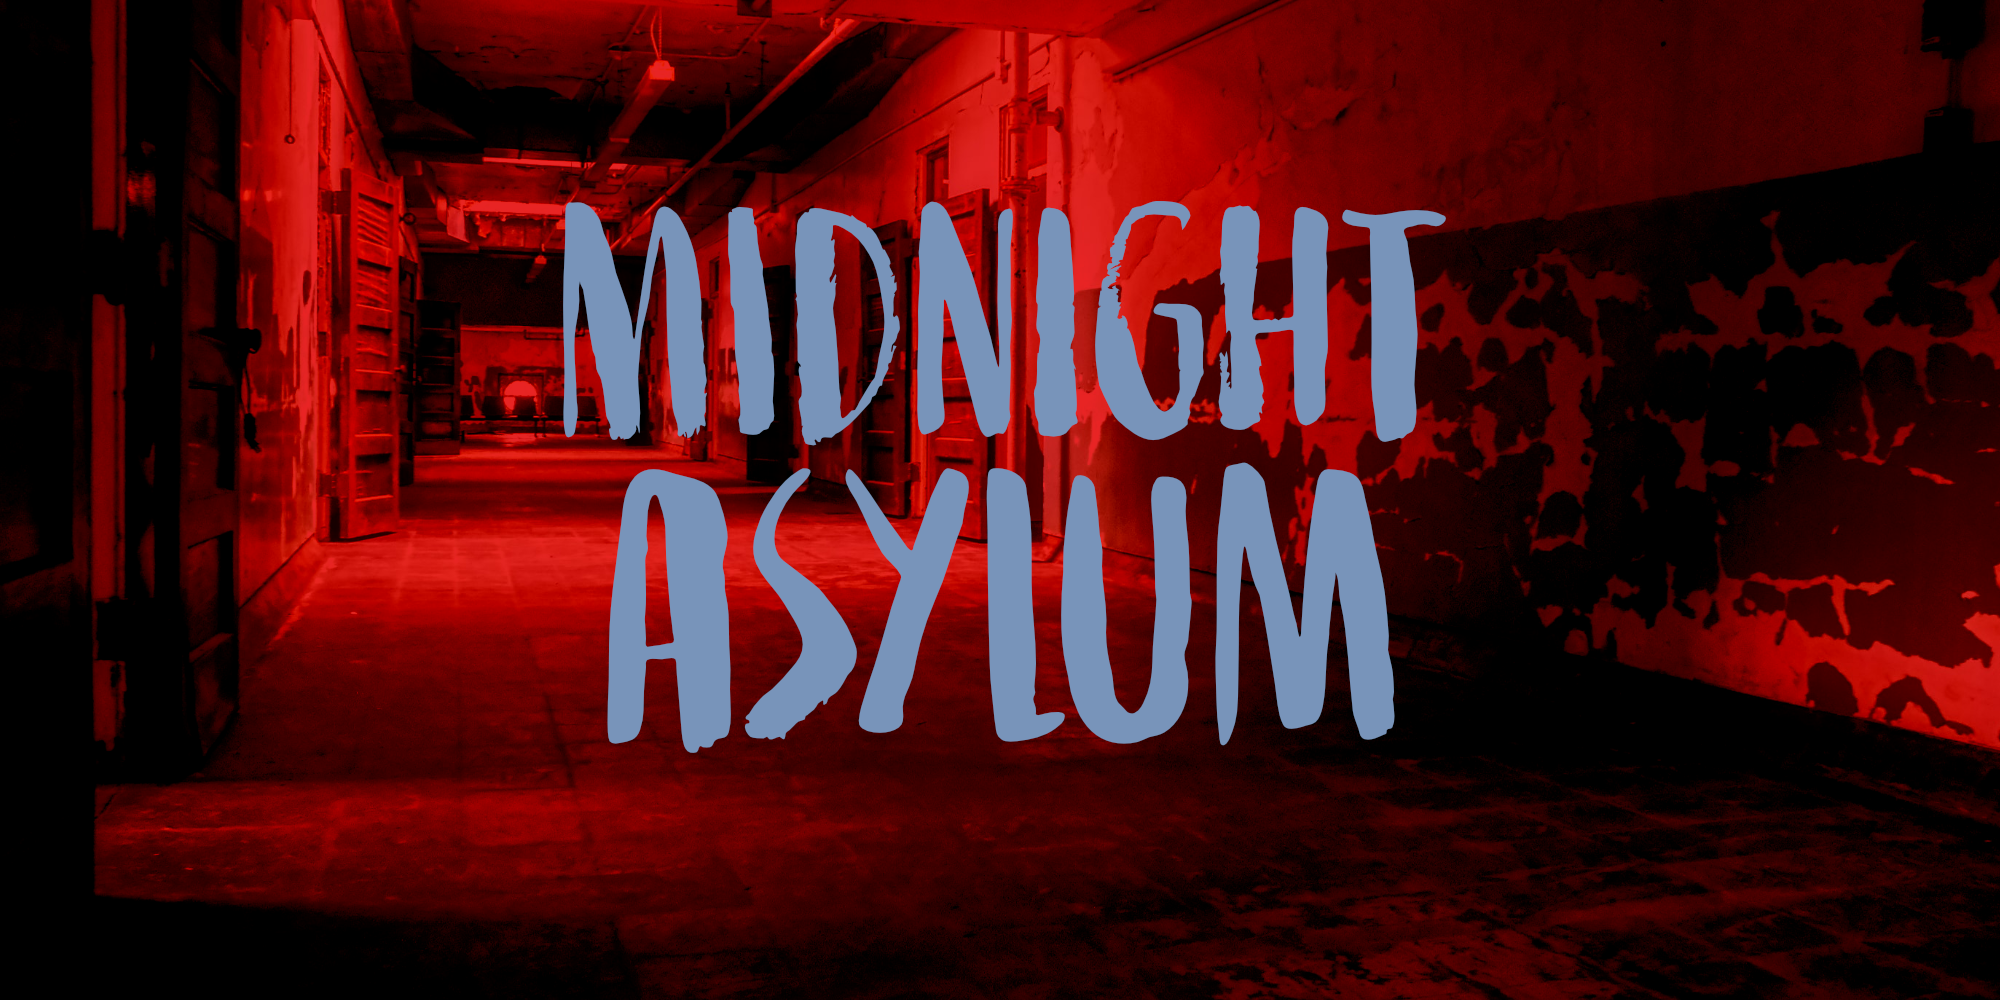 Midnight Asylum